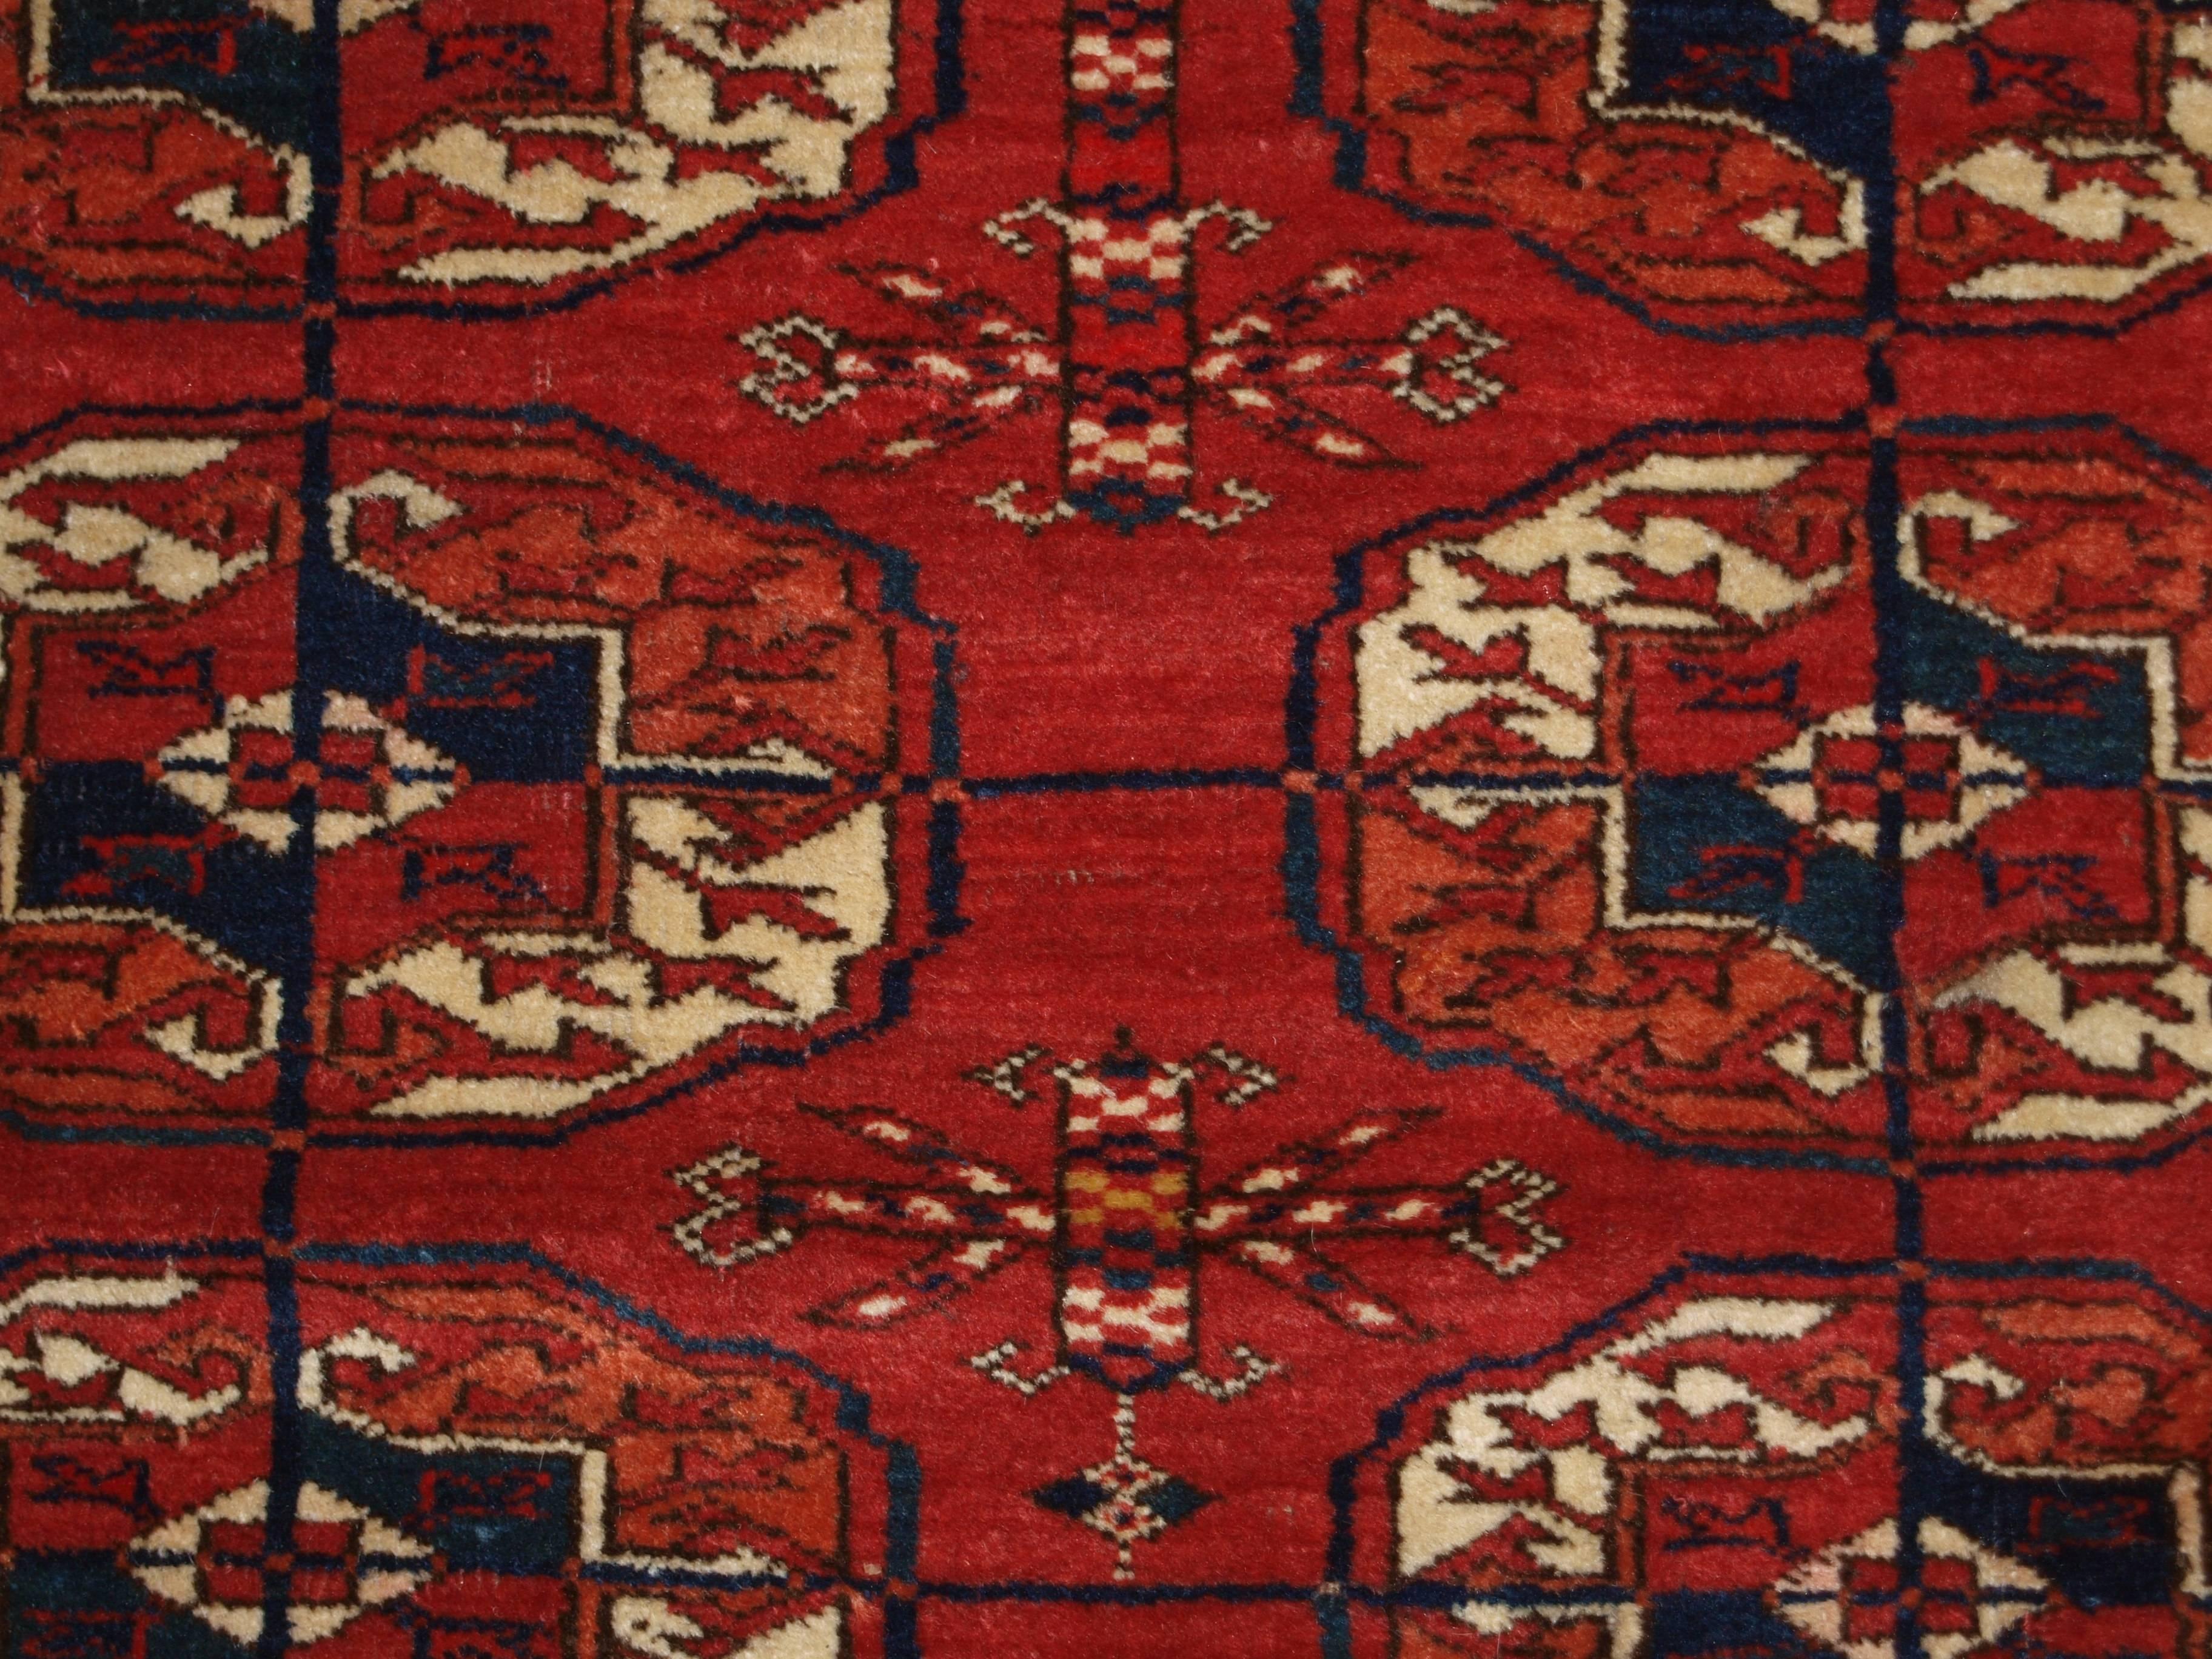 Central Asian Antique Tekke Turkmen Rug, Excellent Design, Color and Fine Weave, circa 1900